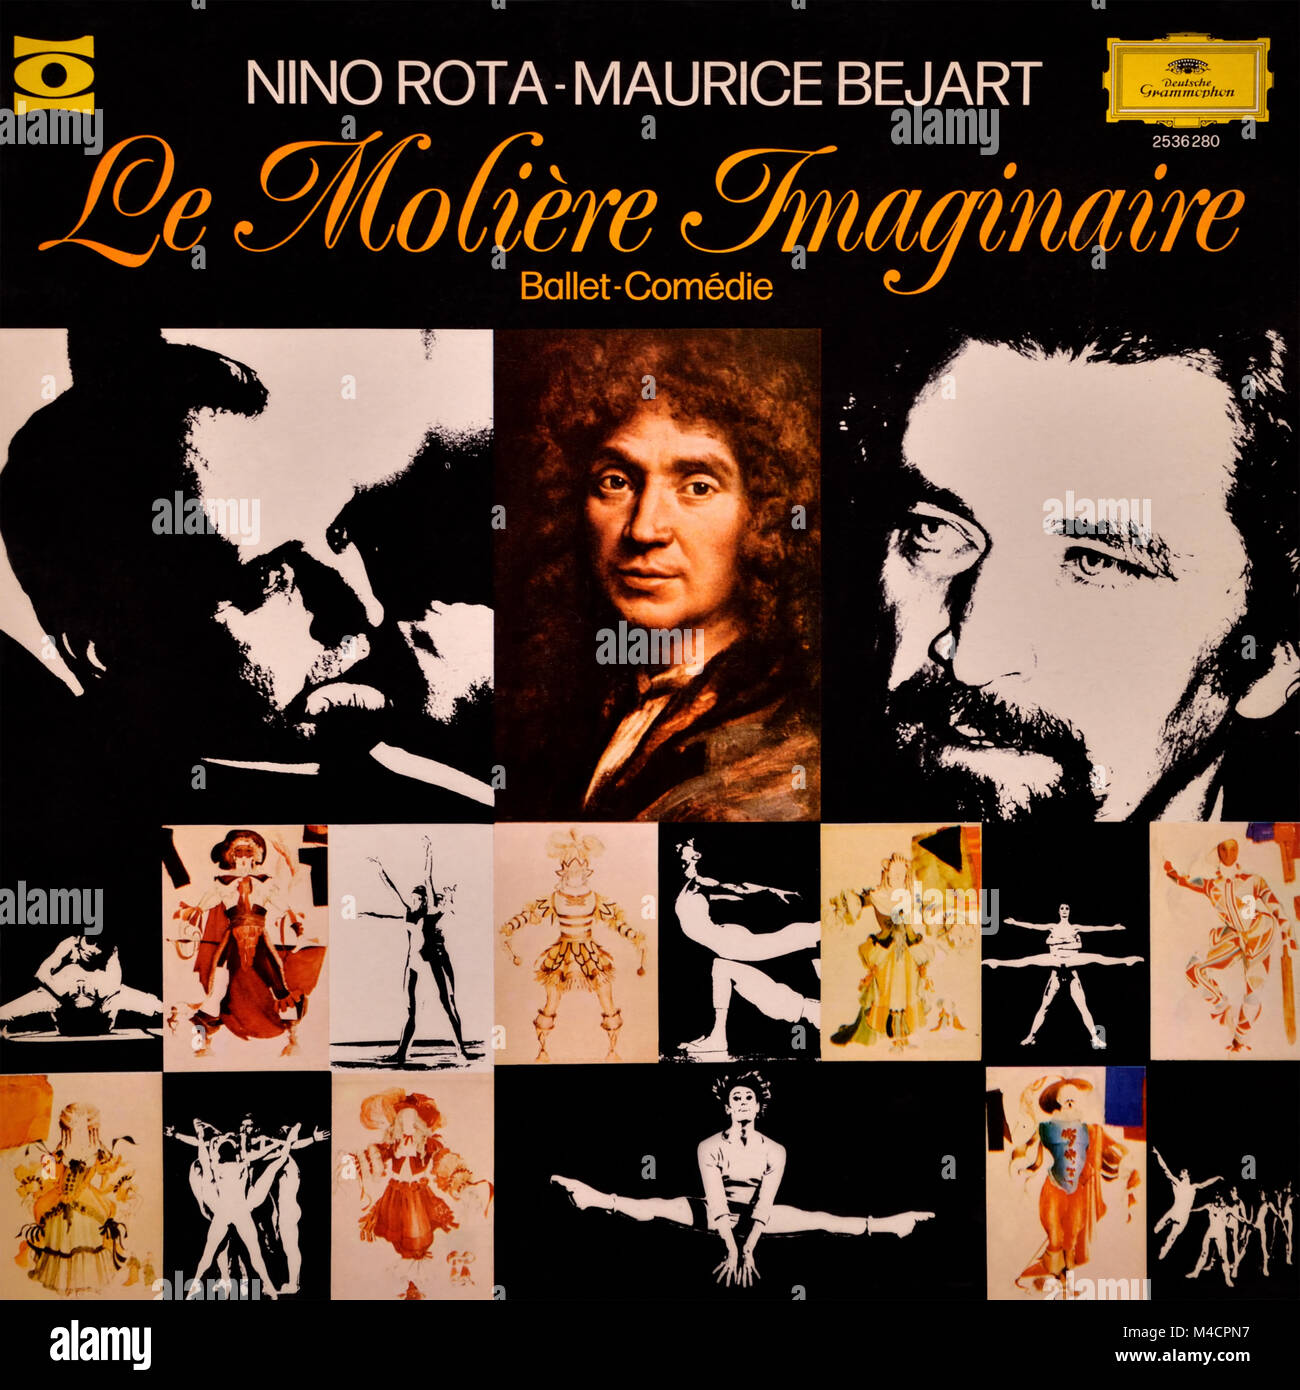 Nino Rota, Maurice Béjart - original Vinyl Album Cover - Le Molière Imaginaire - 1976 Stockfoto